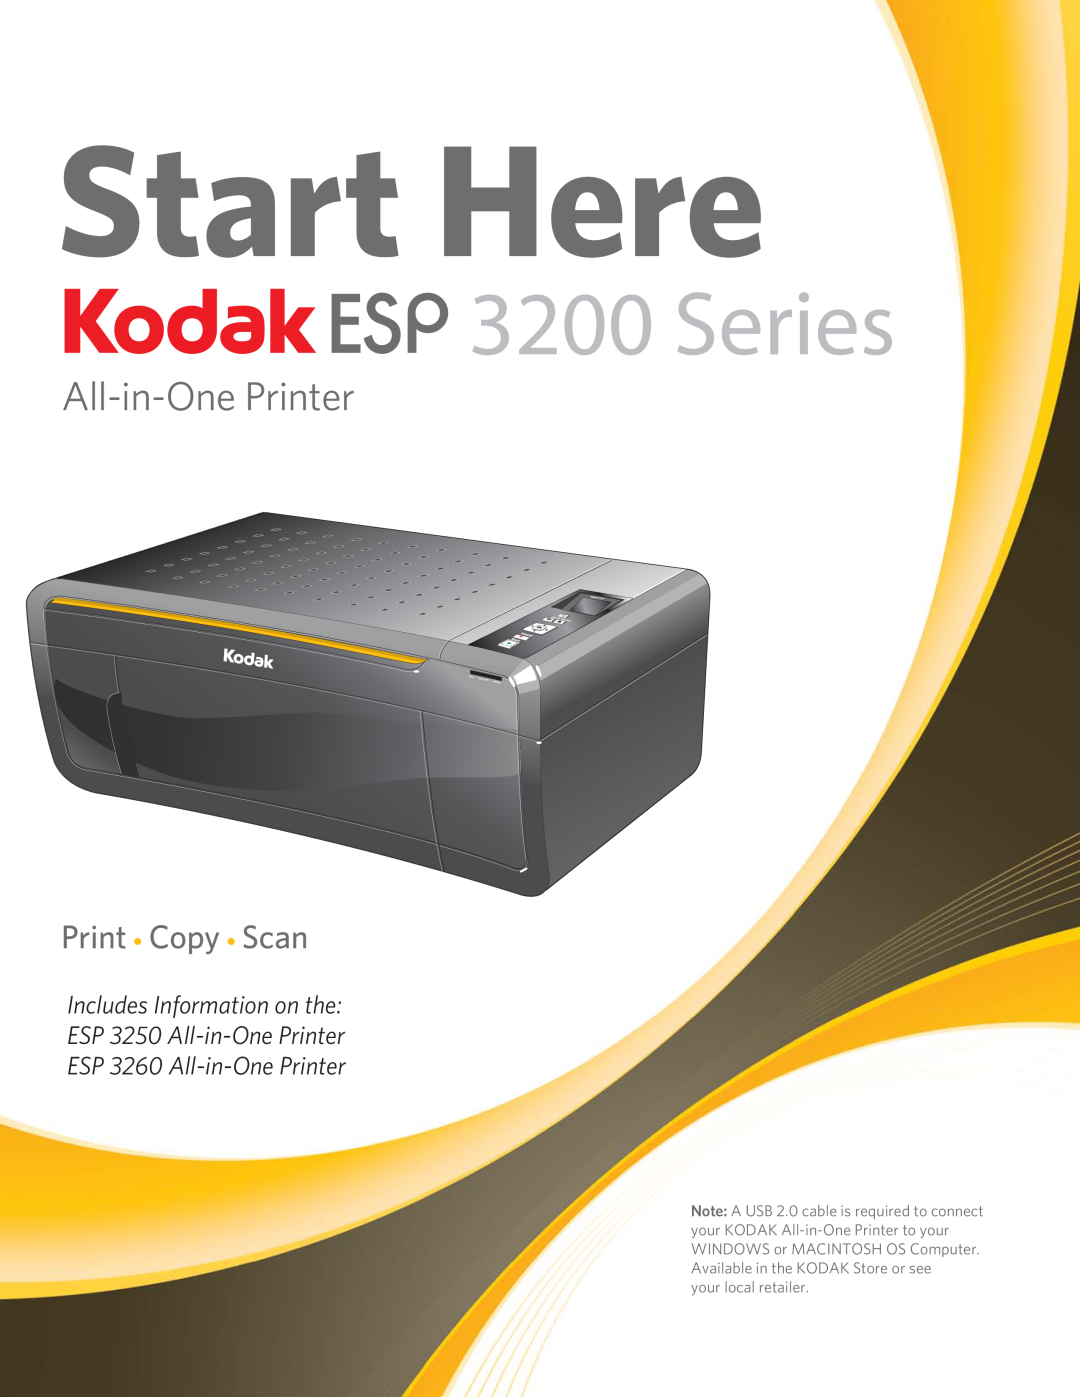 Kodak 3200 manual Start Here, Series, Print Copy Scan, ESP 3260 All-in-One Printer, your local retailer, Back, Home 